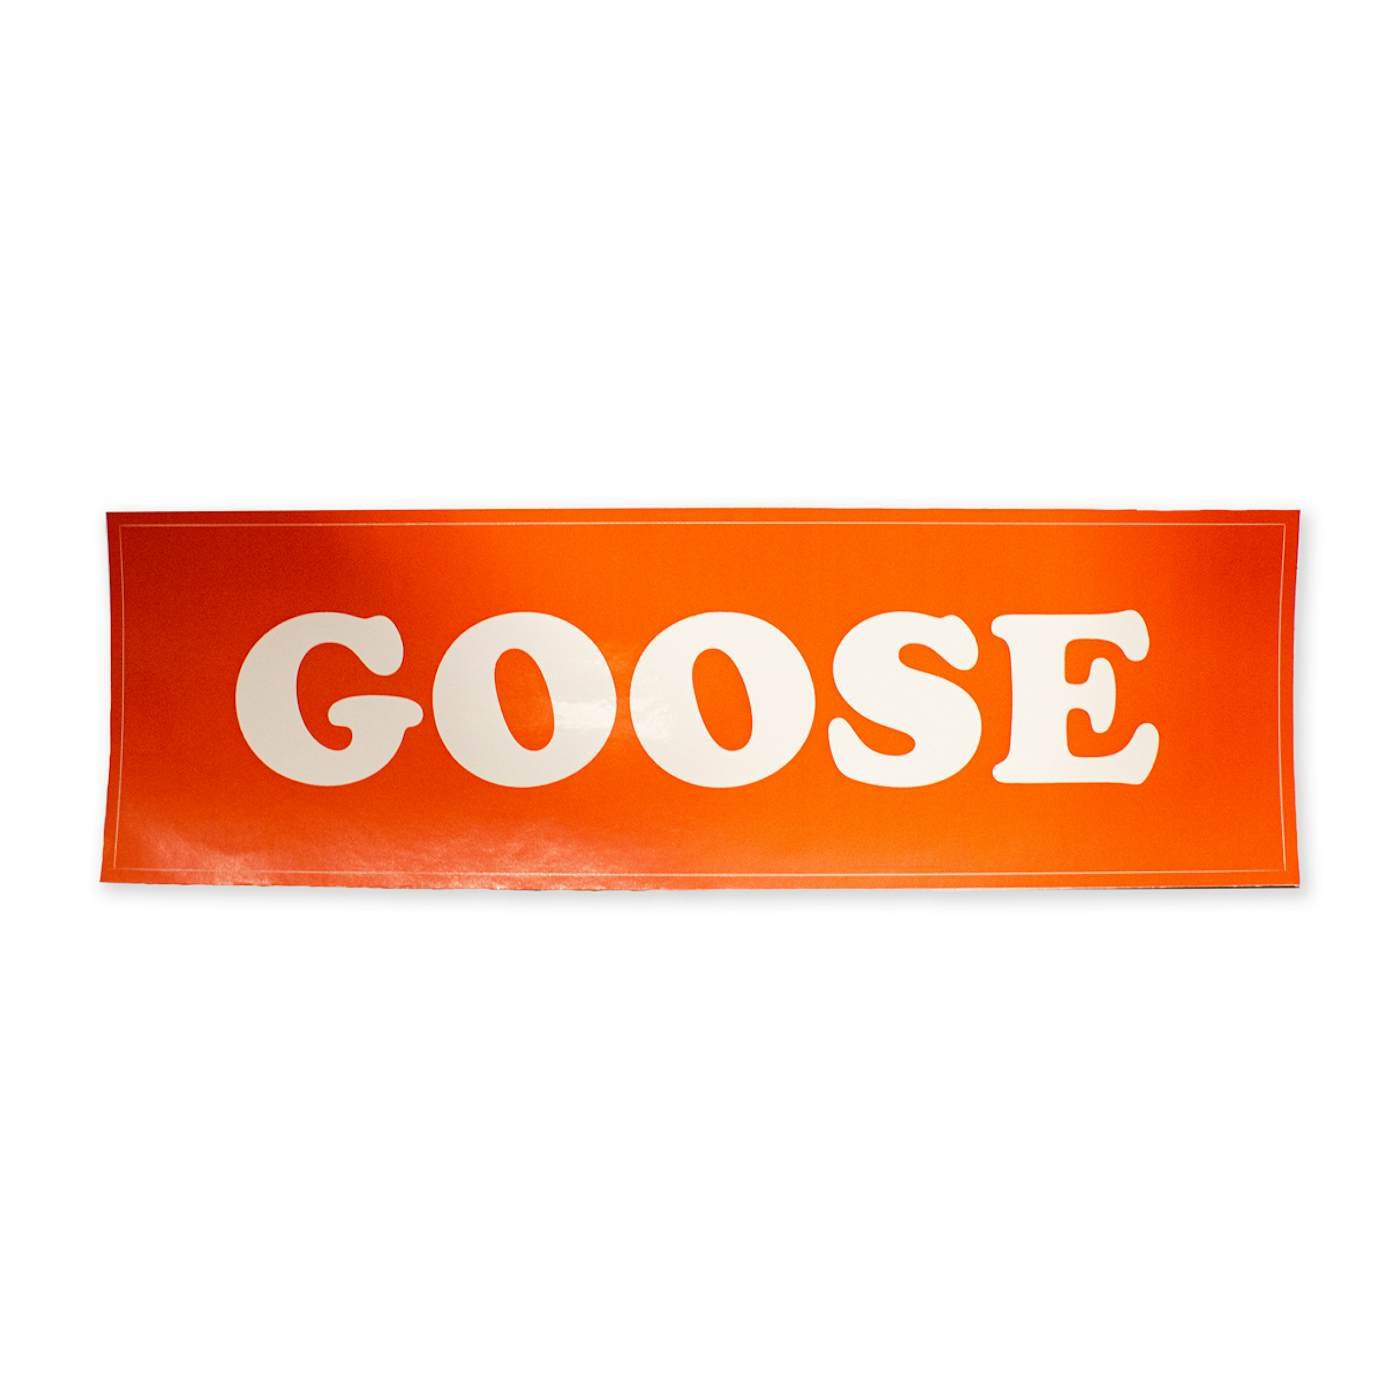 Goose Bumper Sticker